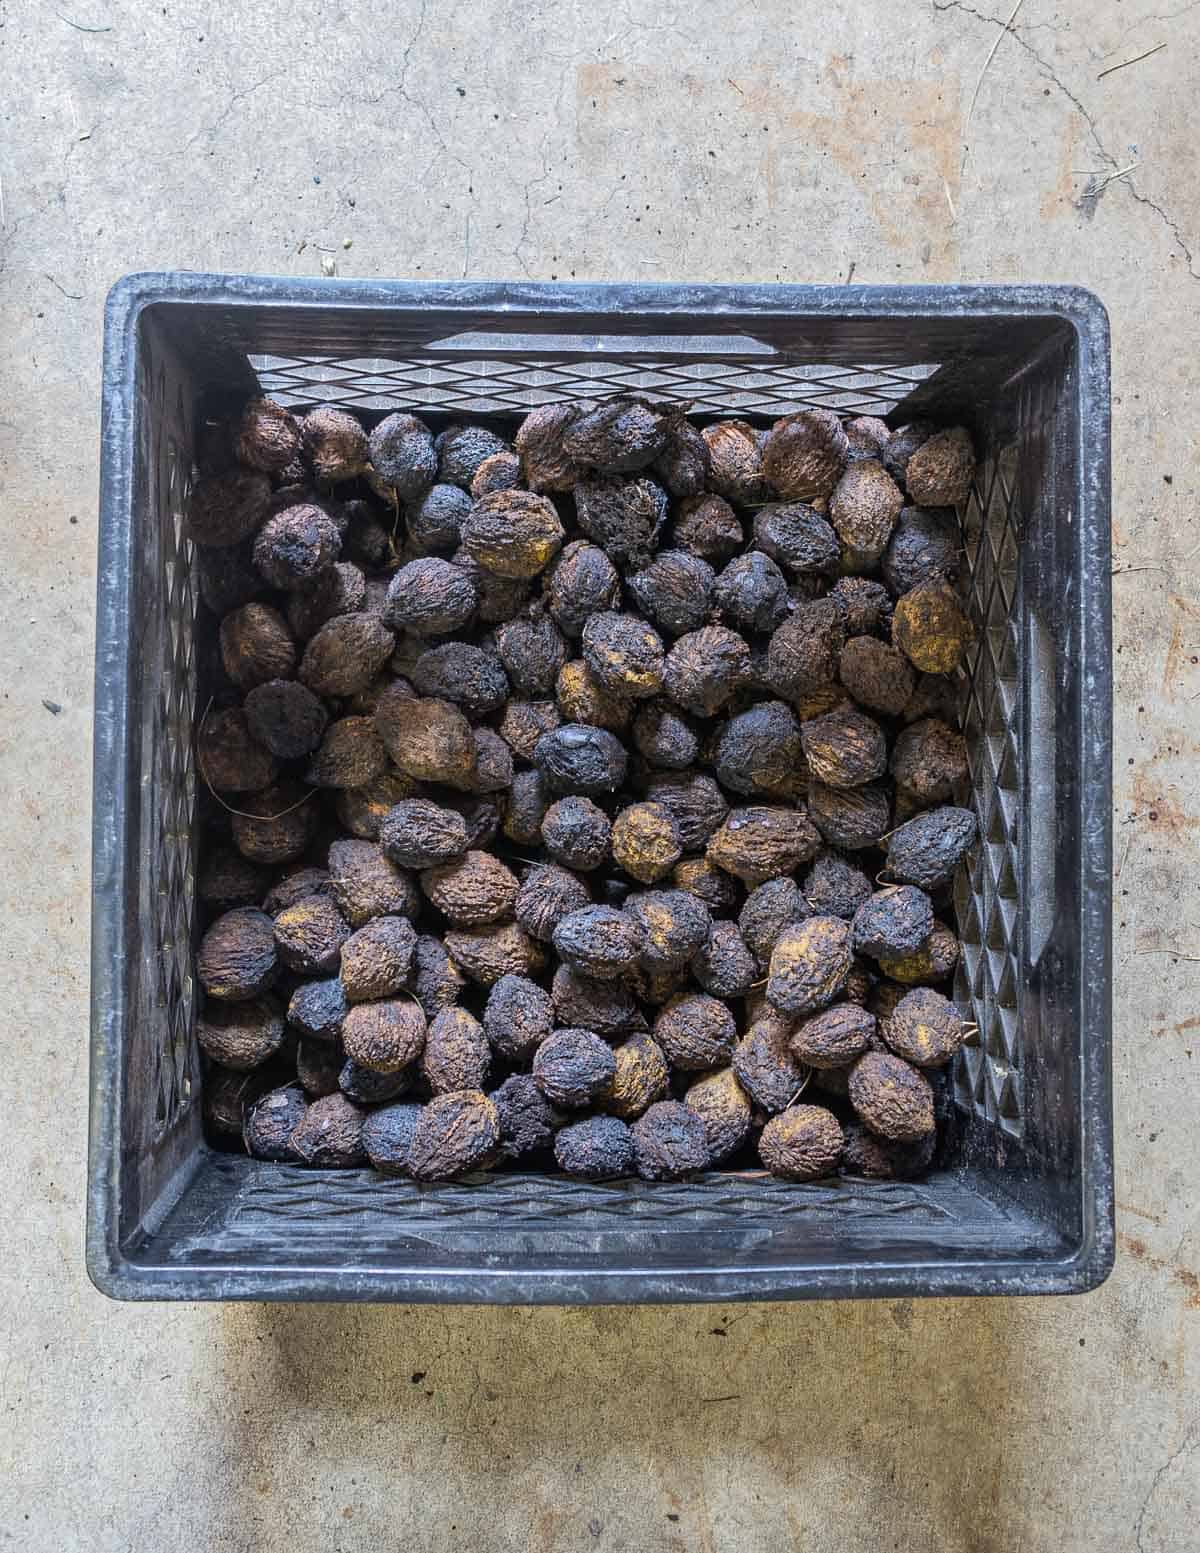 Storing dried black walnuts in a milk crate.